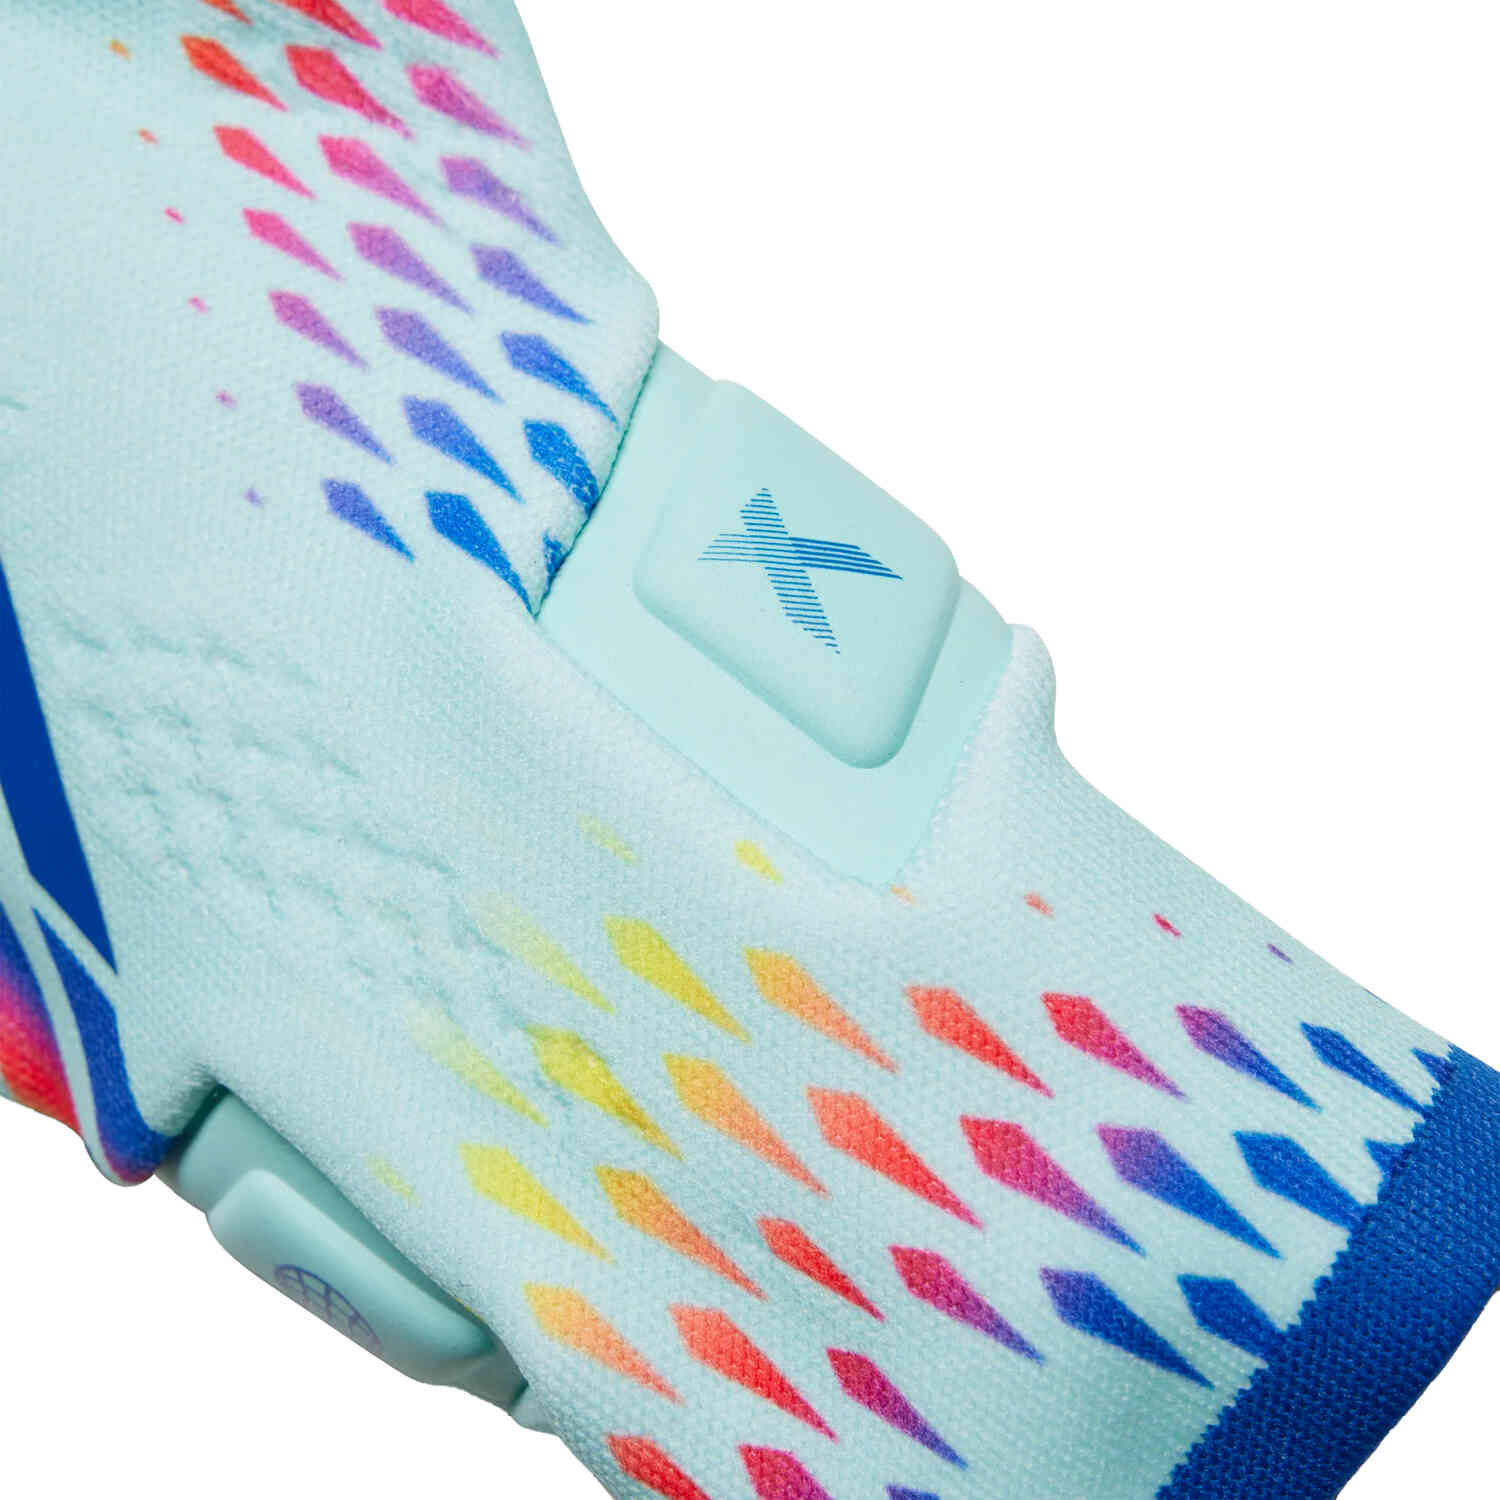 adidas X Pro Goalkeeper Gloves – Al Rihla Pack